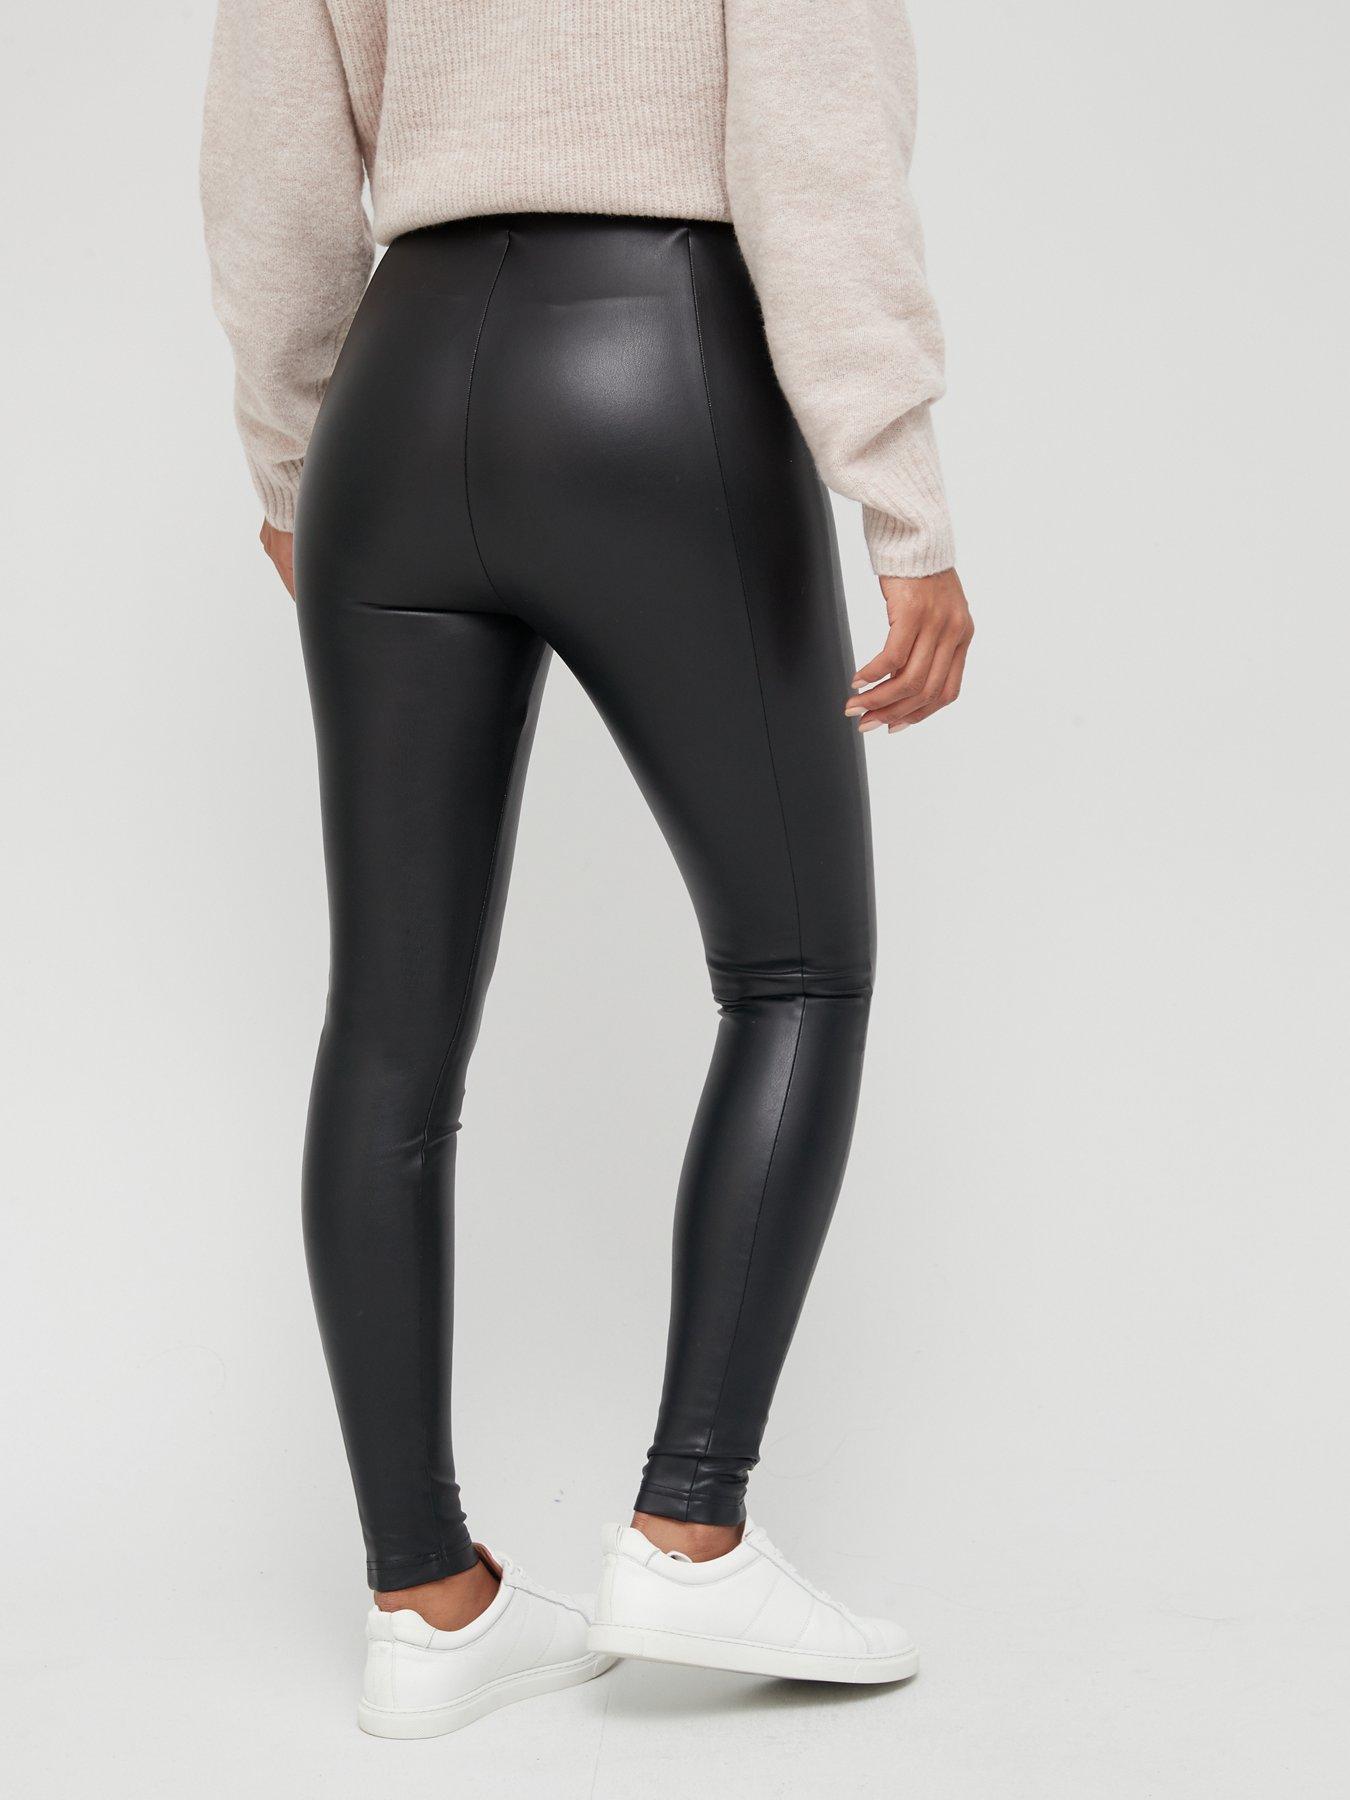 Scoop Women's Printed Faux Leather Leggings, Black, Medium (8-10